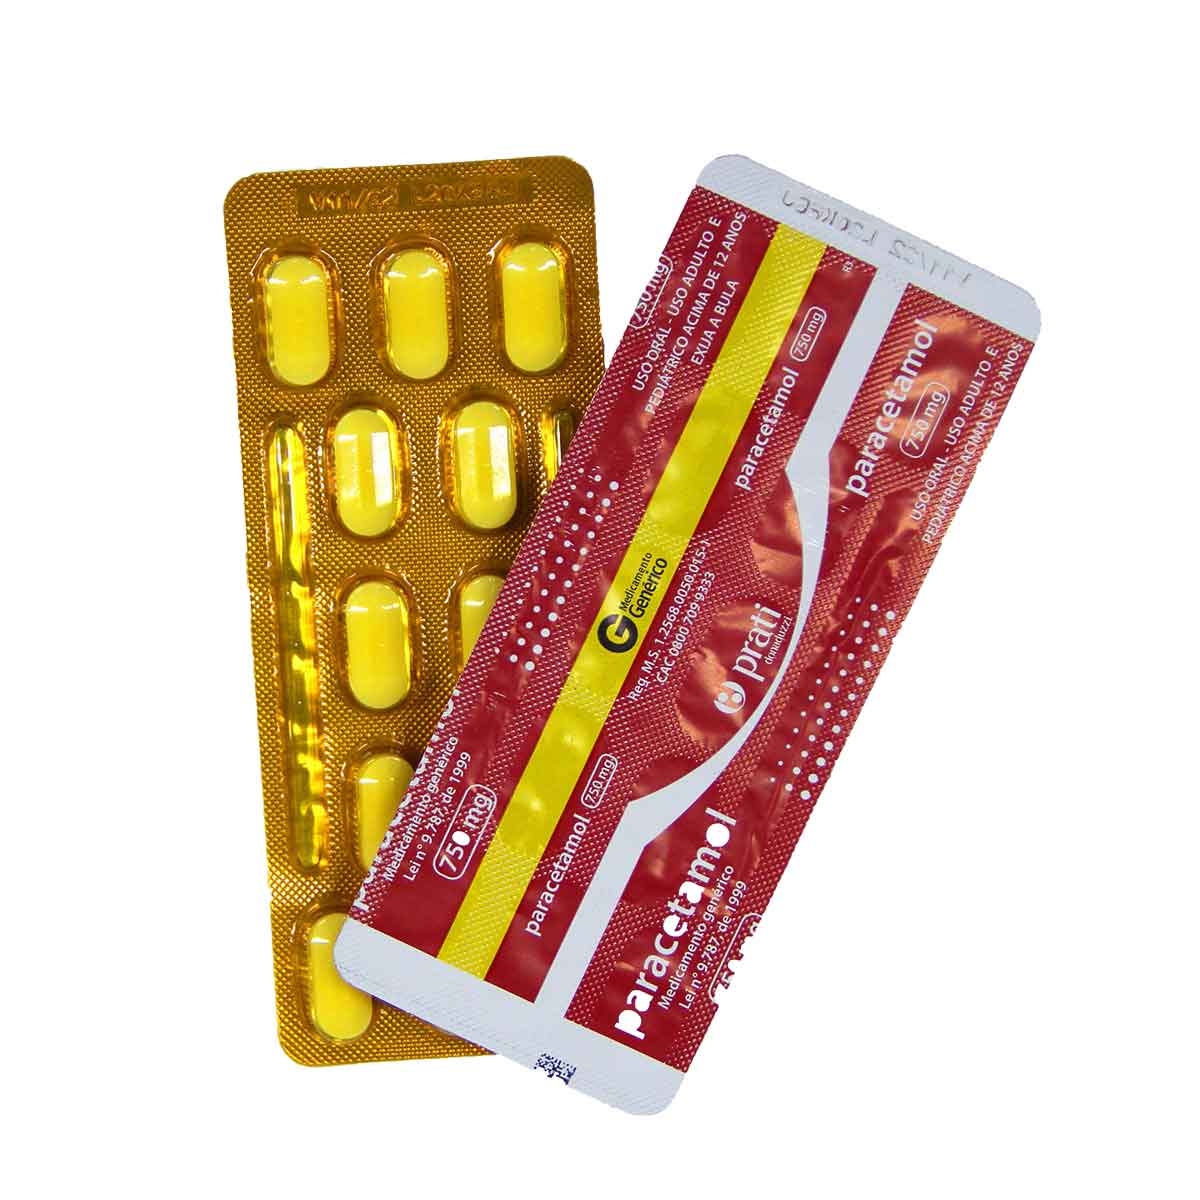 Paracetamol 750mg 12 comprimidos Prati Donaduzzi Genérico